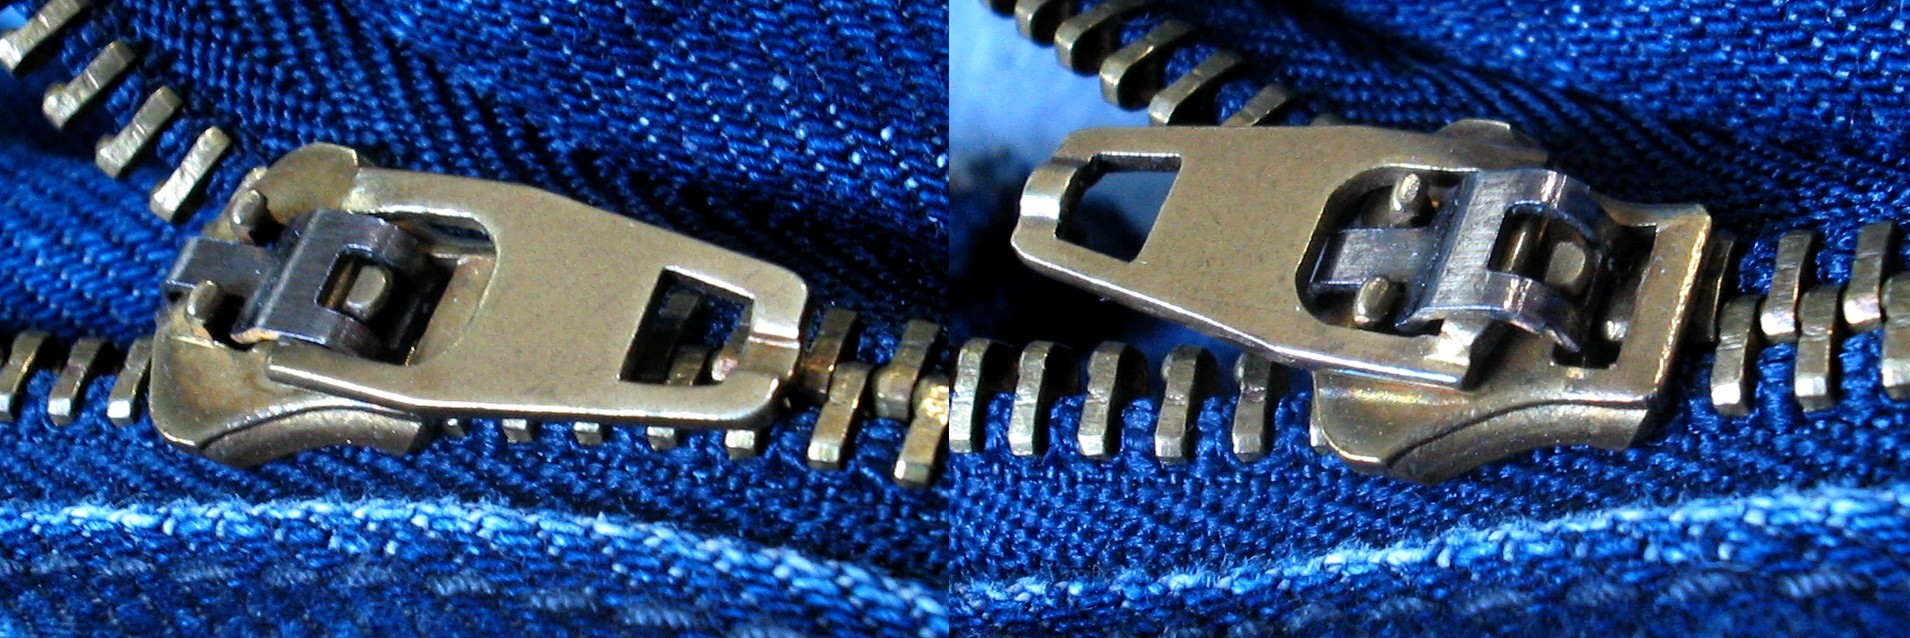 Metal zipper - Wikipedia